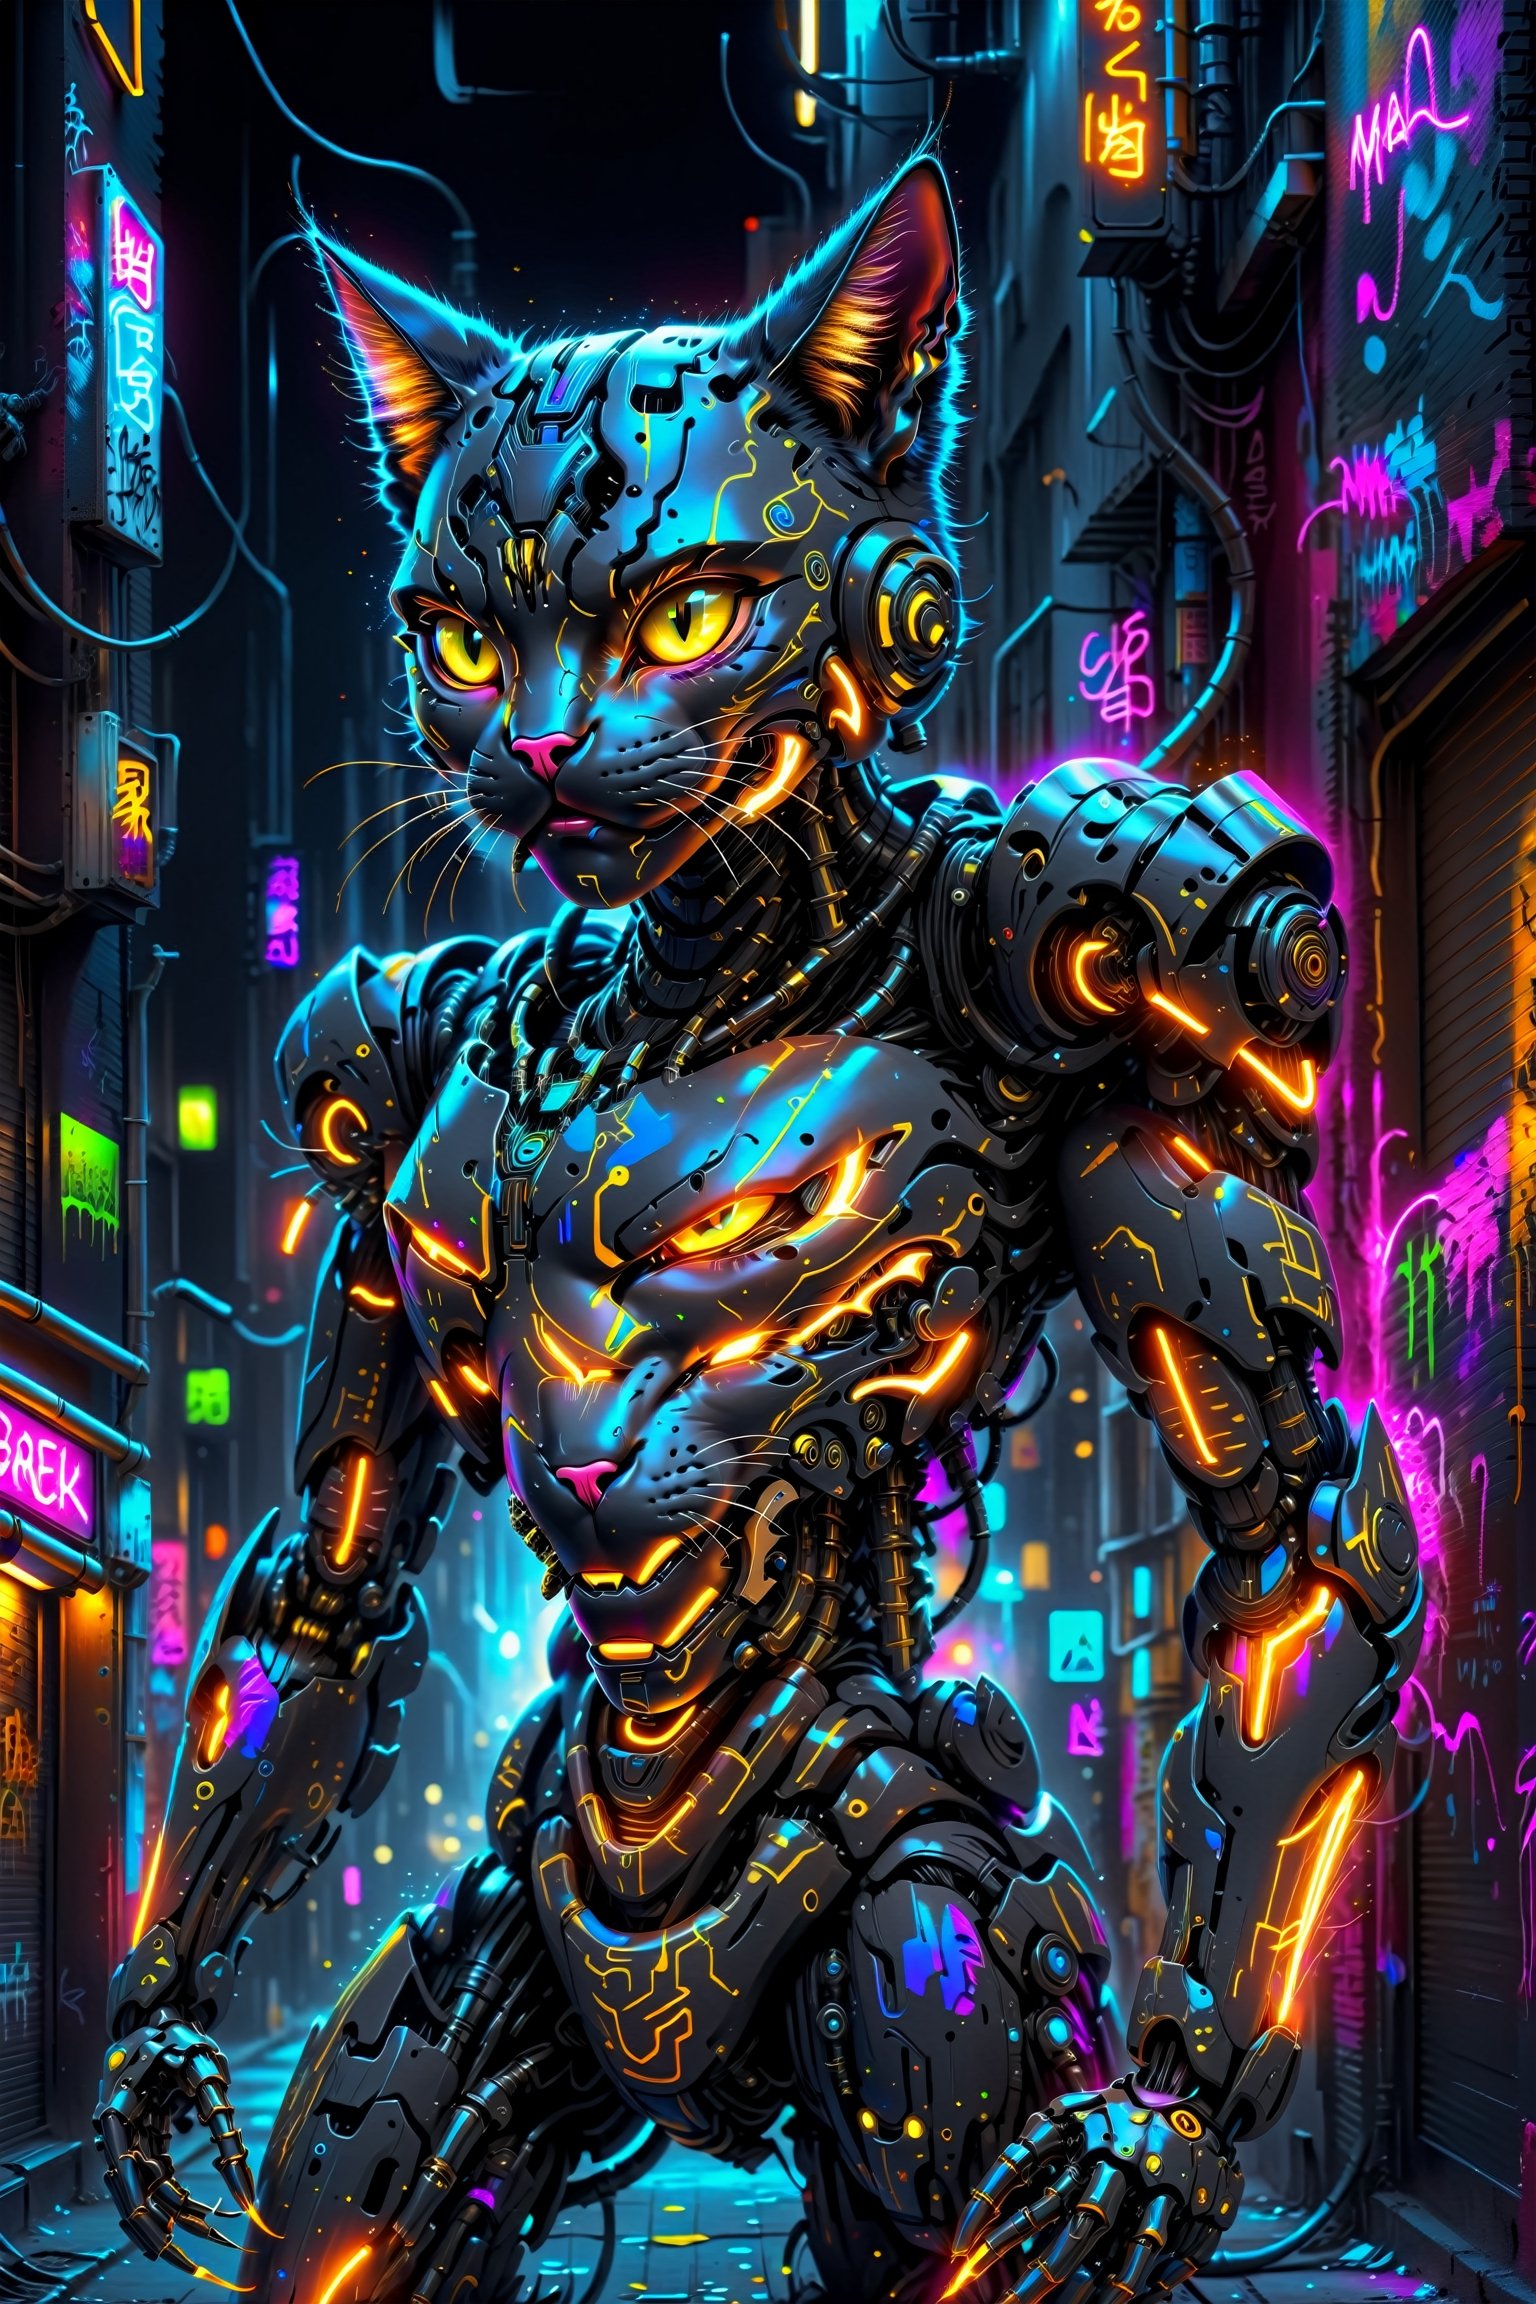  graffiti neon street art A sleek, futuristic mecha human black Mad Cat, with glowing cybernetic enhancements prowls through a golden neon-lit cityscape  neon vivid colors, SelectiveColorStyle,DonM3l3m3nt4lXL,hdsrmr